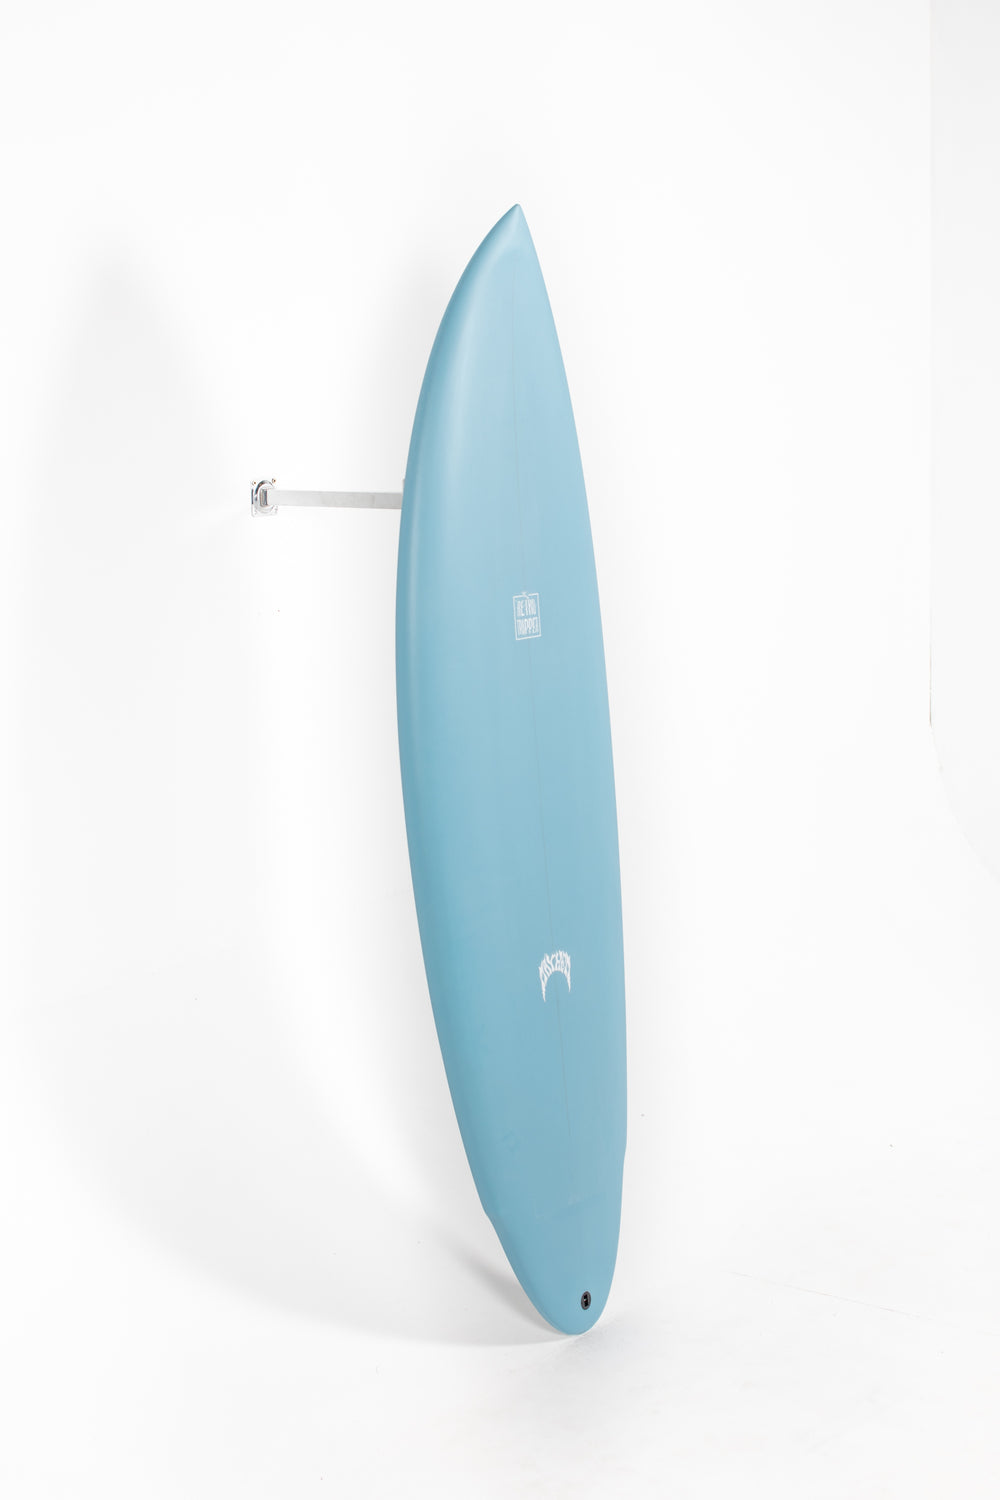 Lost Surfboard - RETRO TRIPPER by Matt Biolos - 5'6